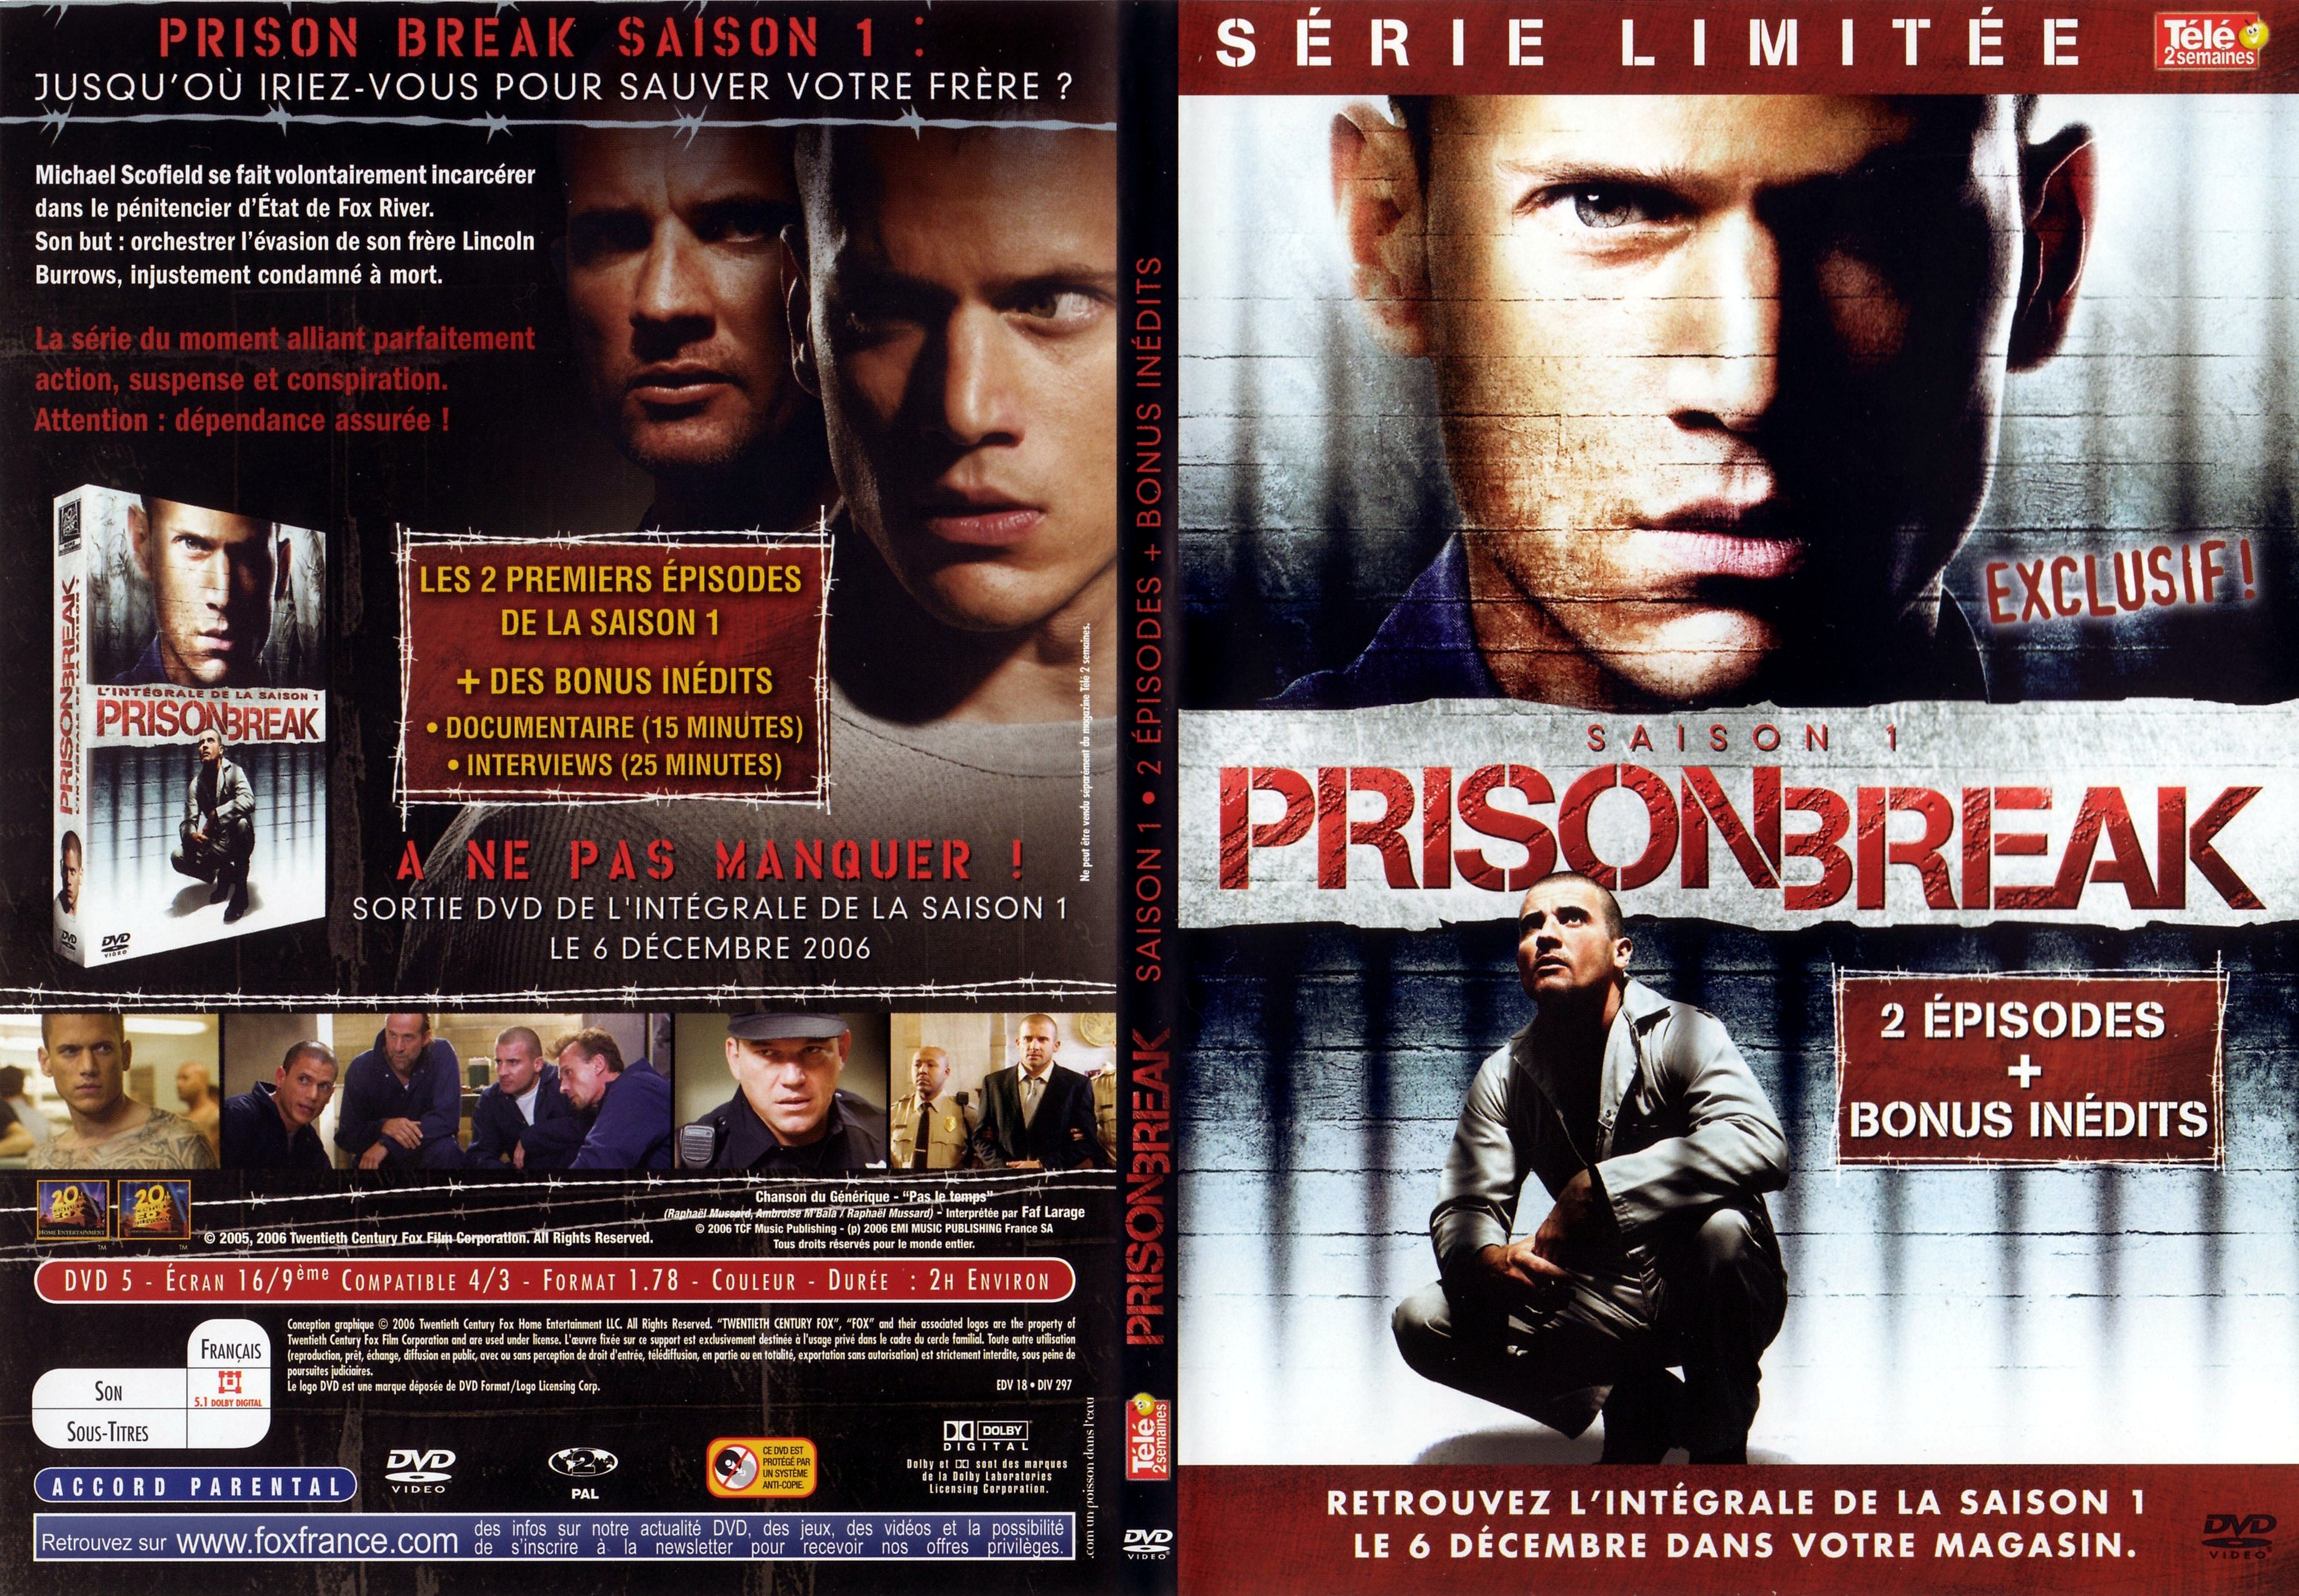 Jaquette DVD Prison break saison 1 DVD 1 v2